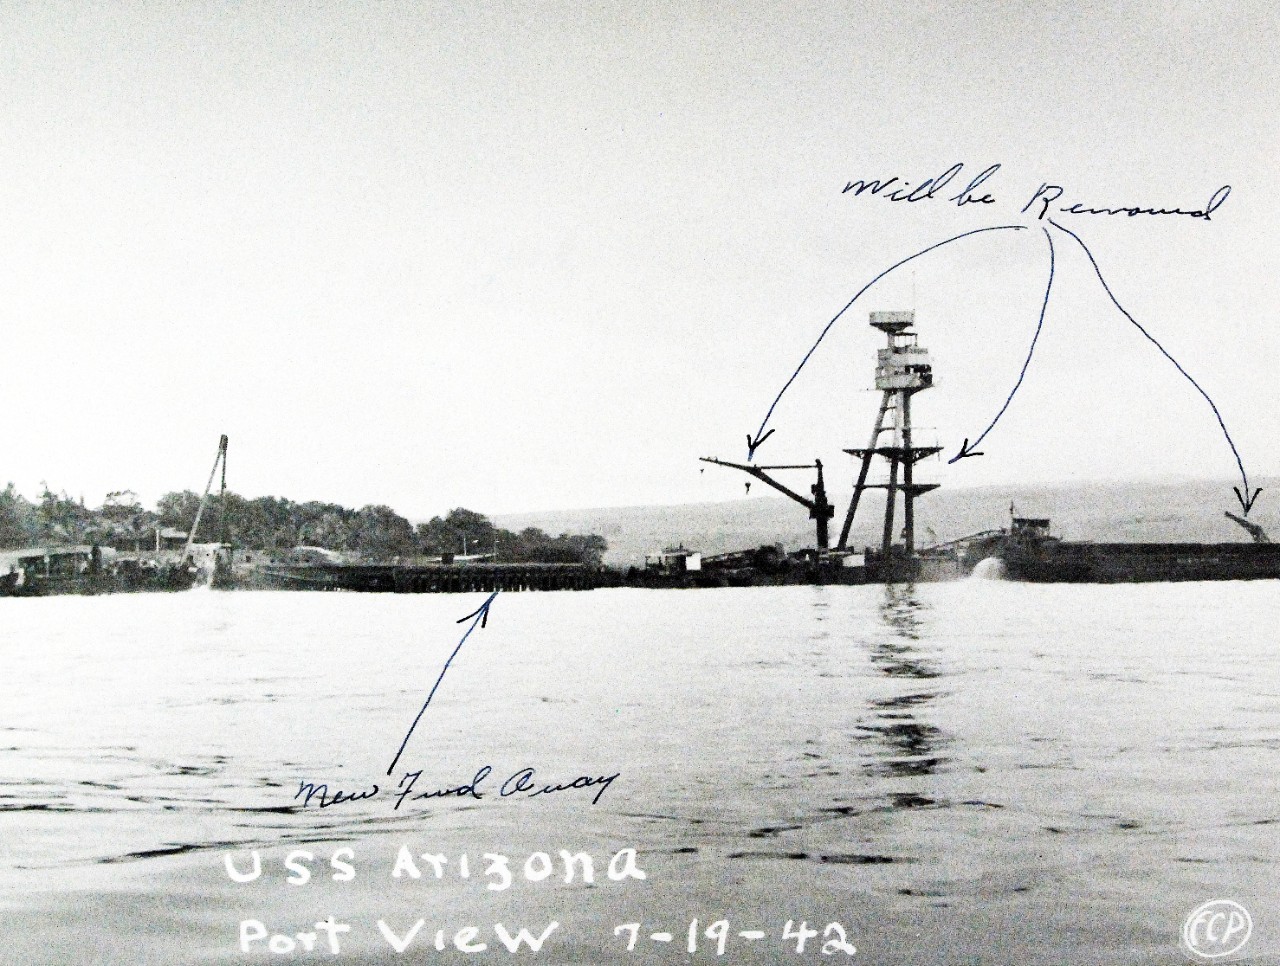 <p>19-LCM-BB39-1-1: USS Arizona (BB 39), port view, July 19, 1942.&nbsp;</p>
